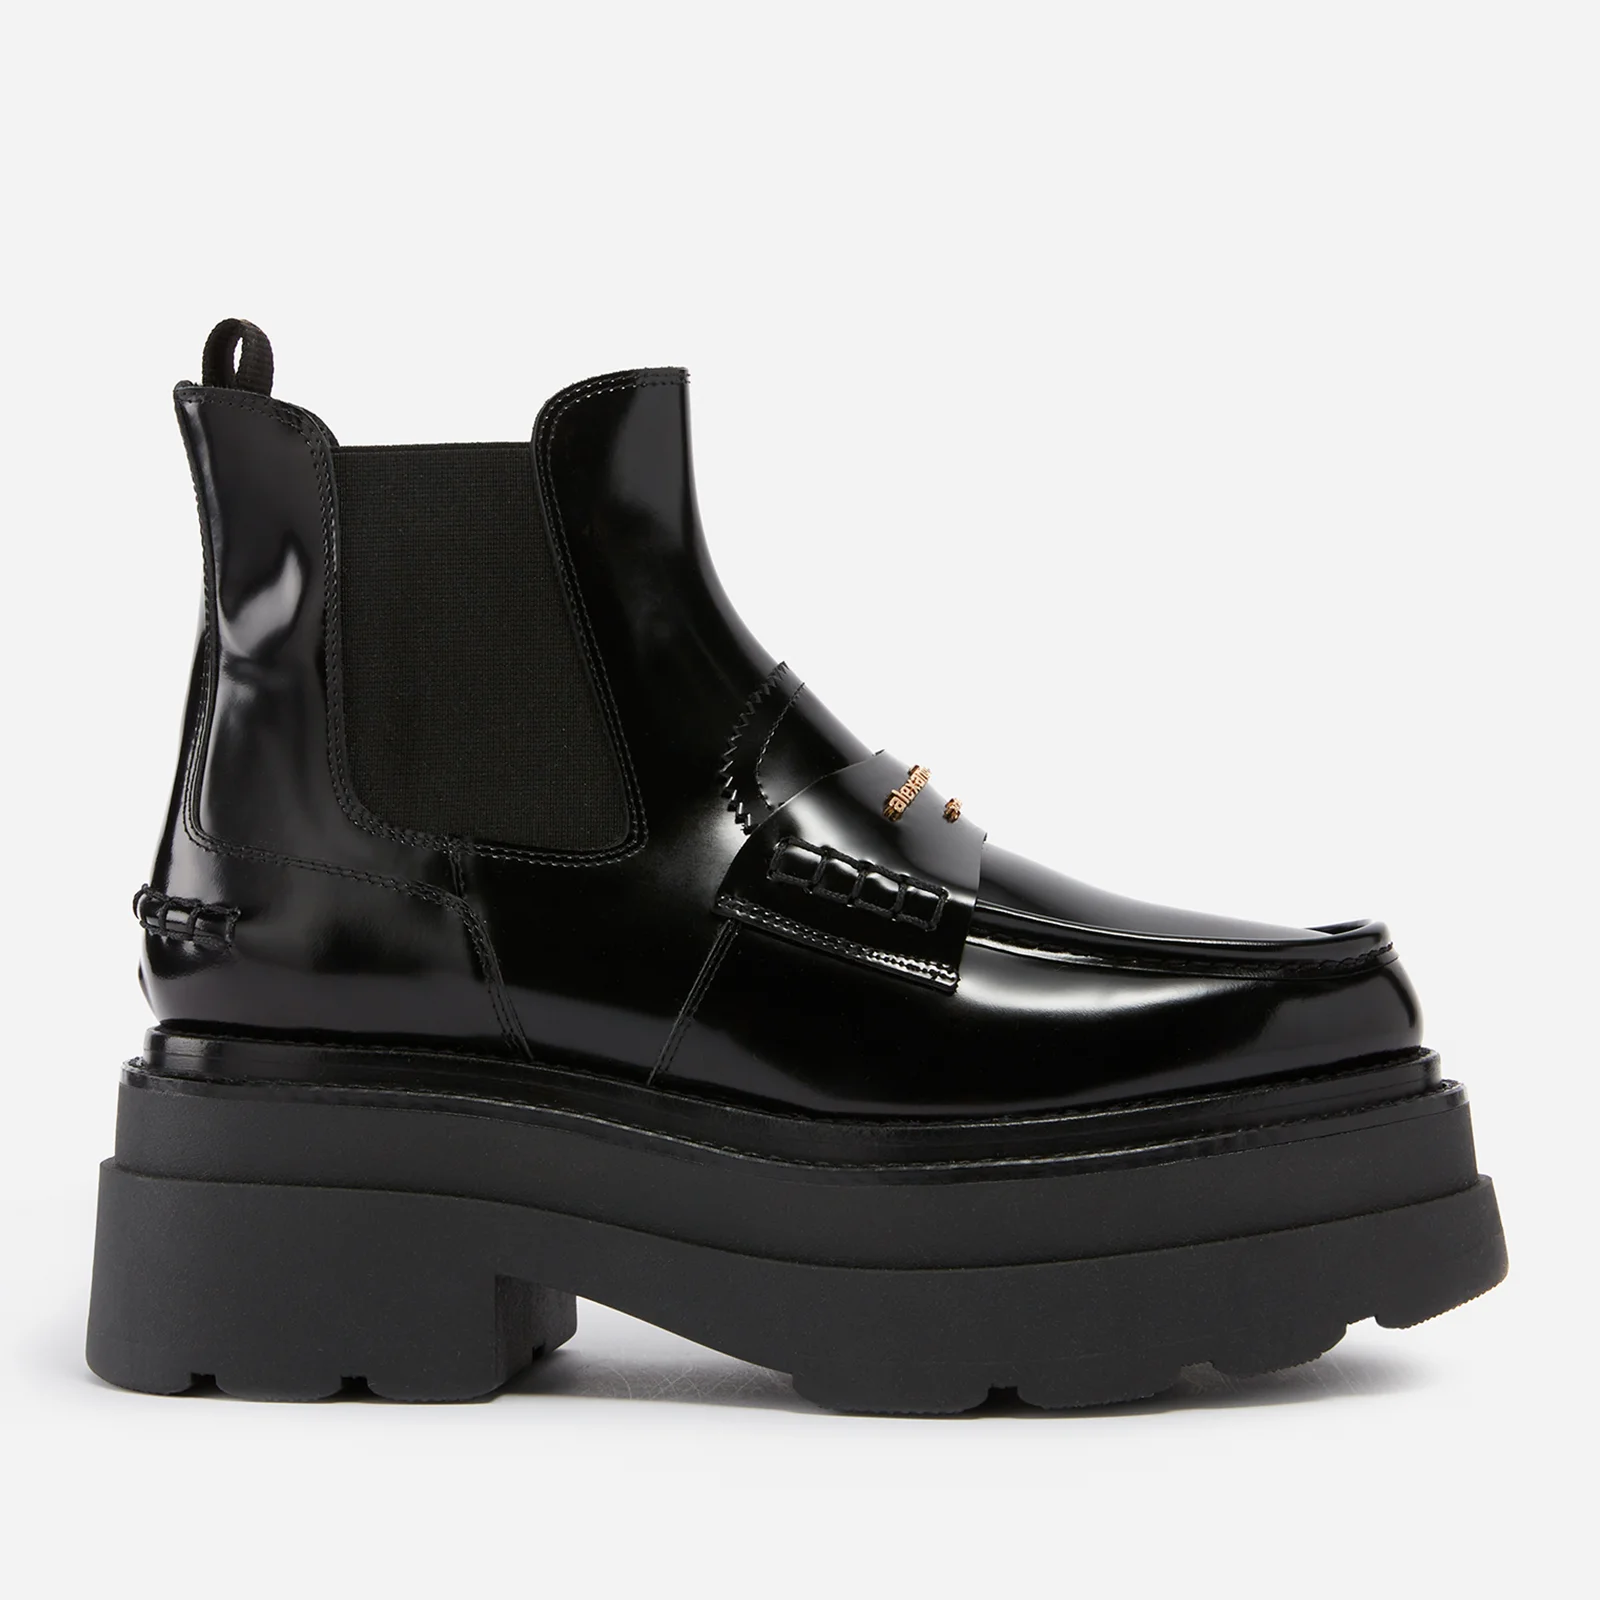 Alexander Wang Women's Carter Leather Platform Chelsea Boots - Black Image 1